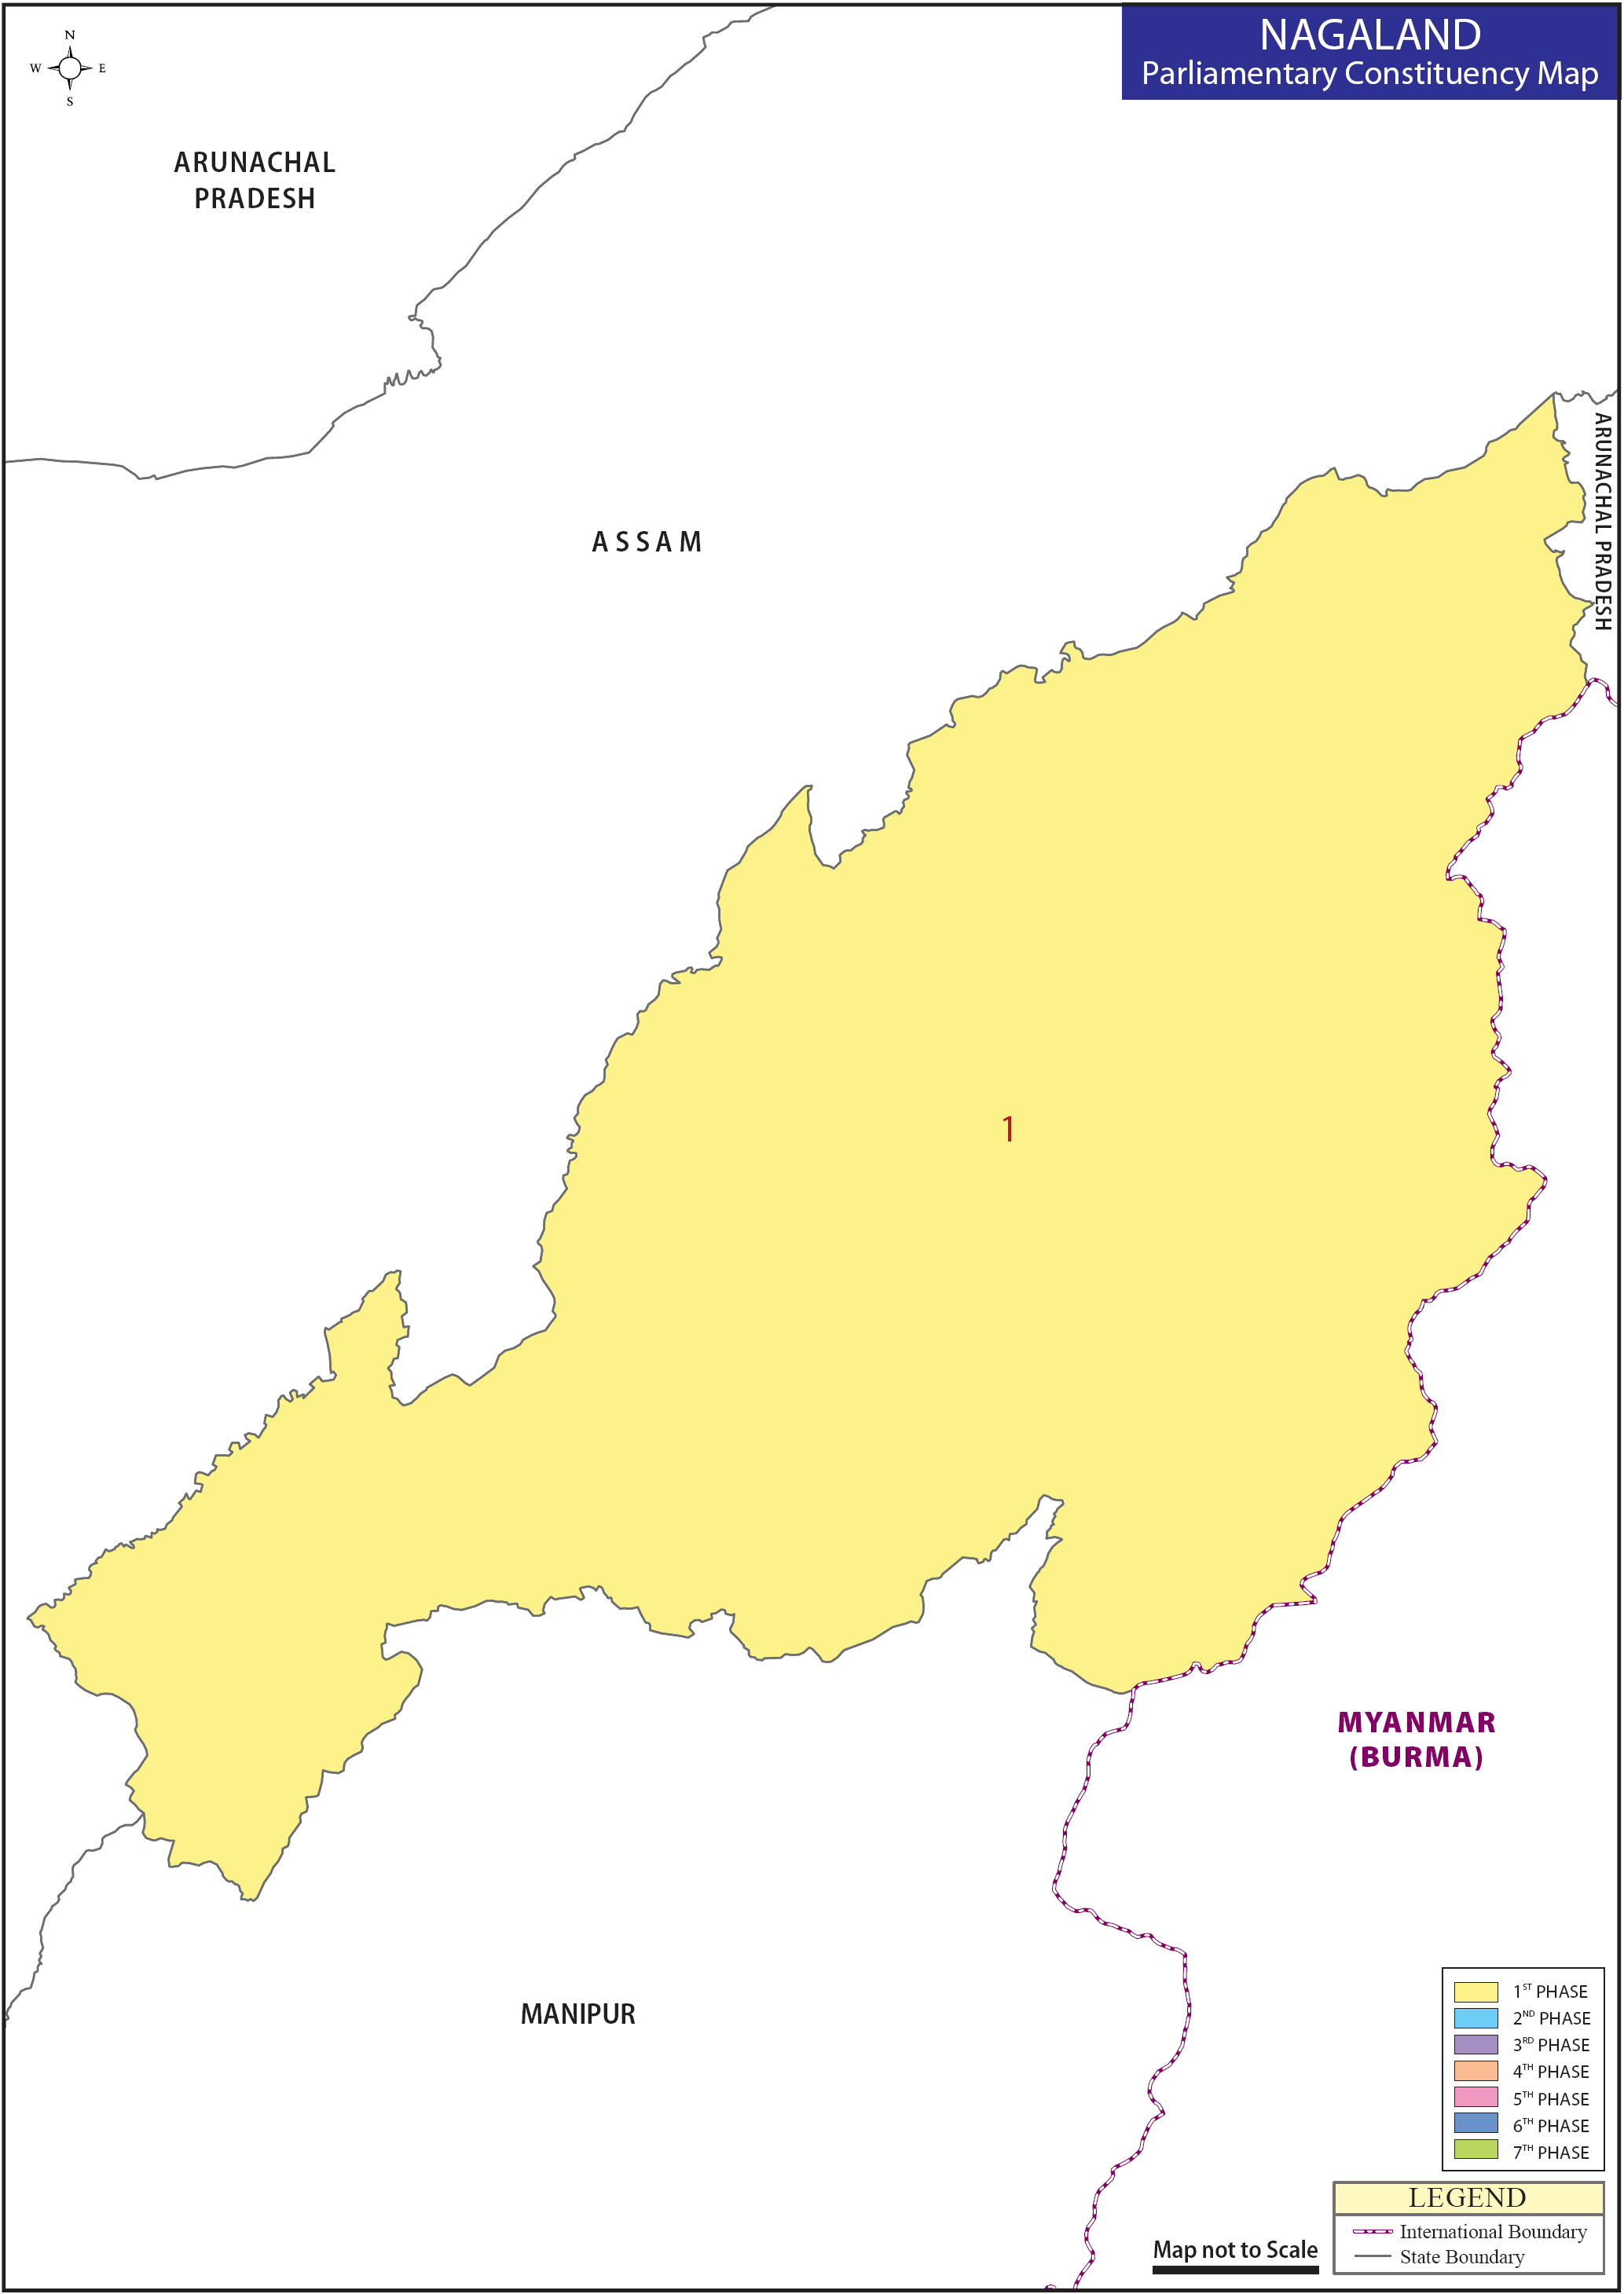 Nagaland Parliamentary Constituency Map